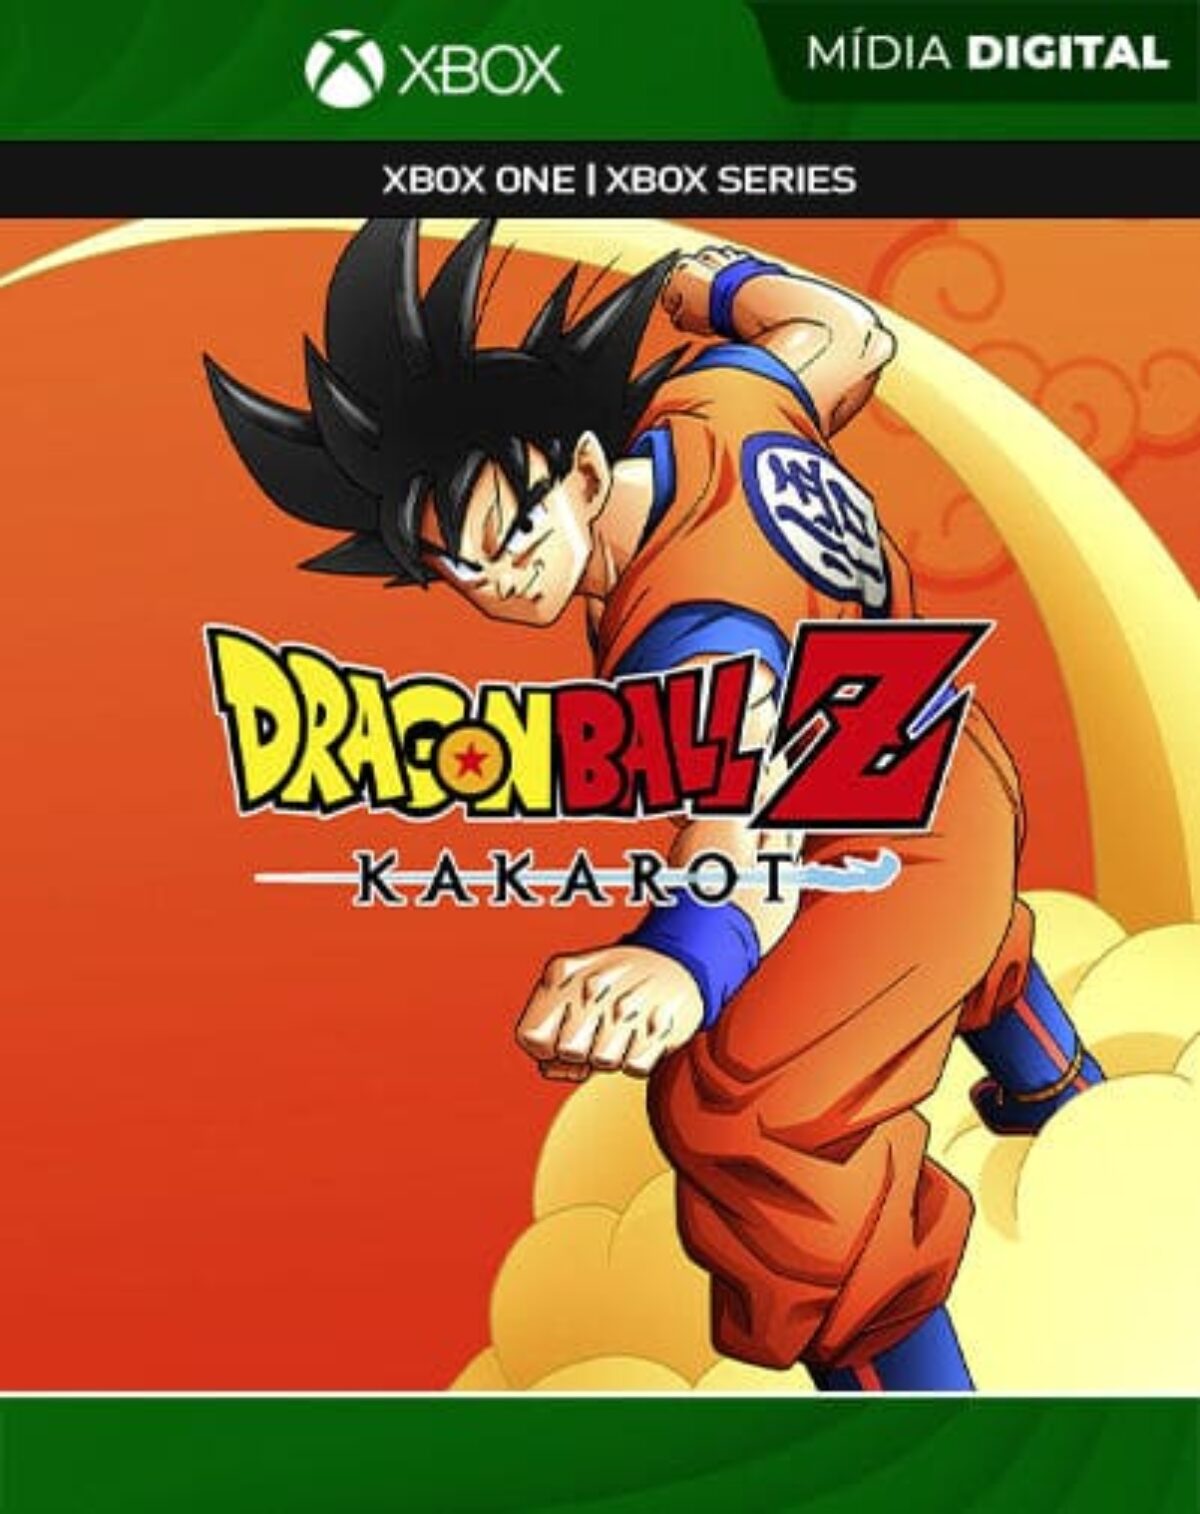 Dragon Ball Z Kakarot Traduzido Pt-Br